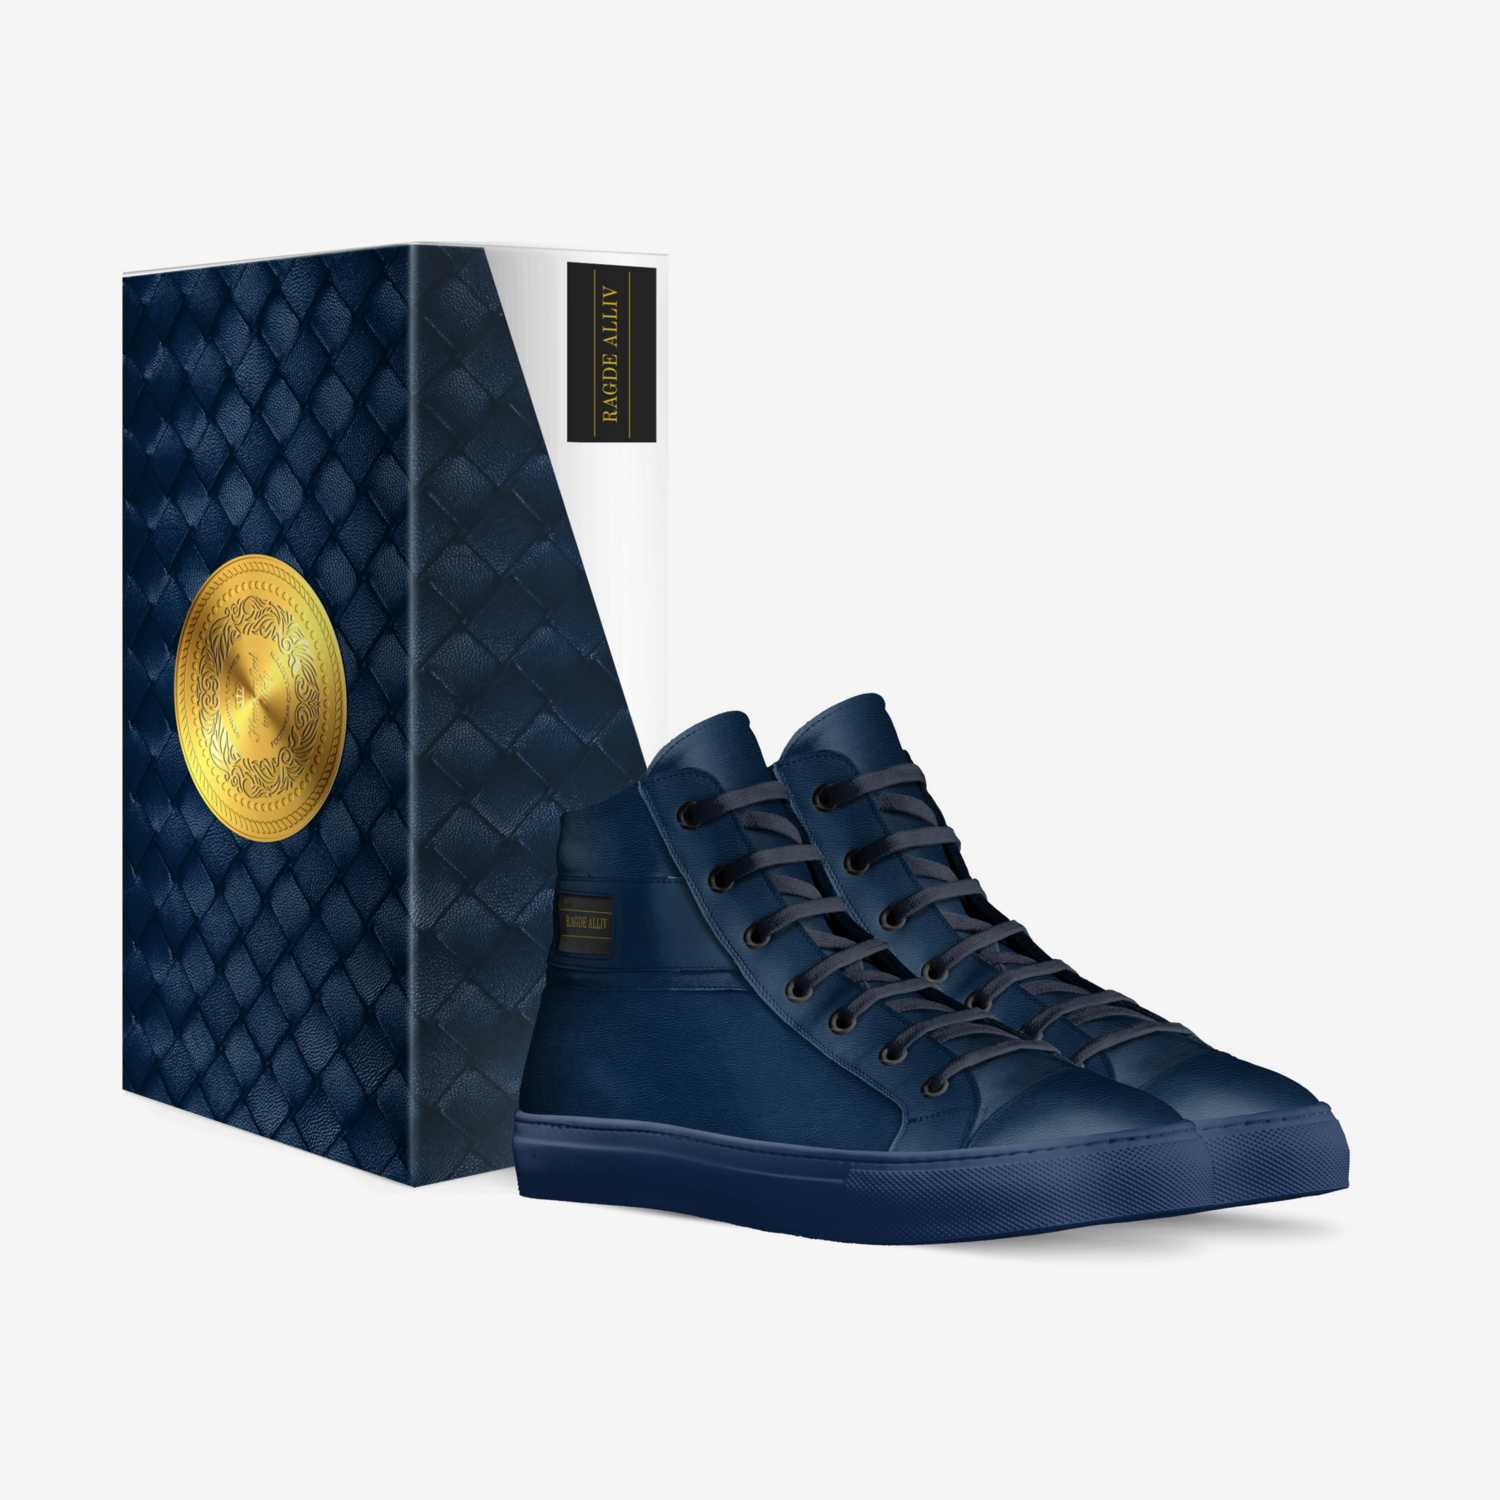 RAGDE ALLIV custom made in Italy shoes by Edgar Villa | Box view